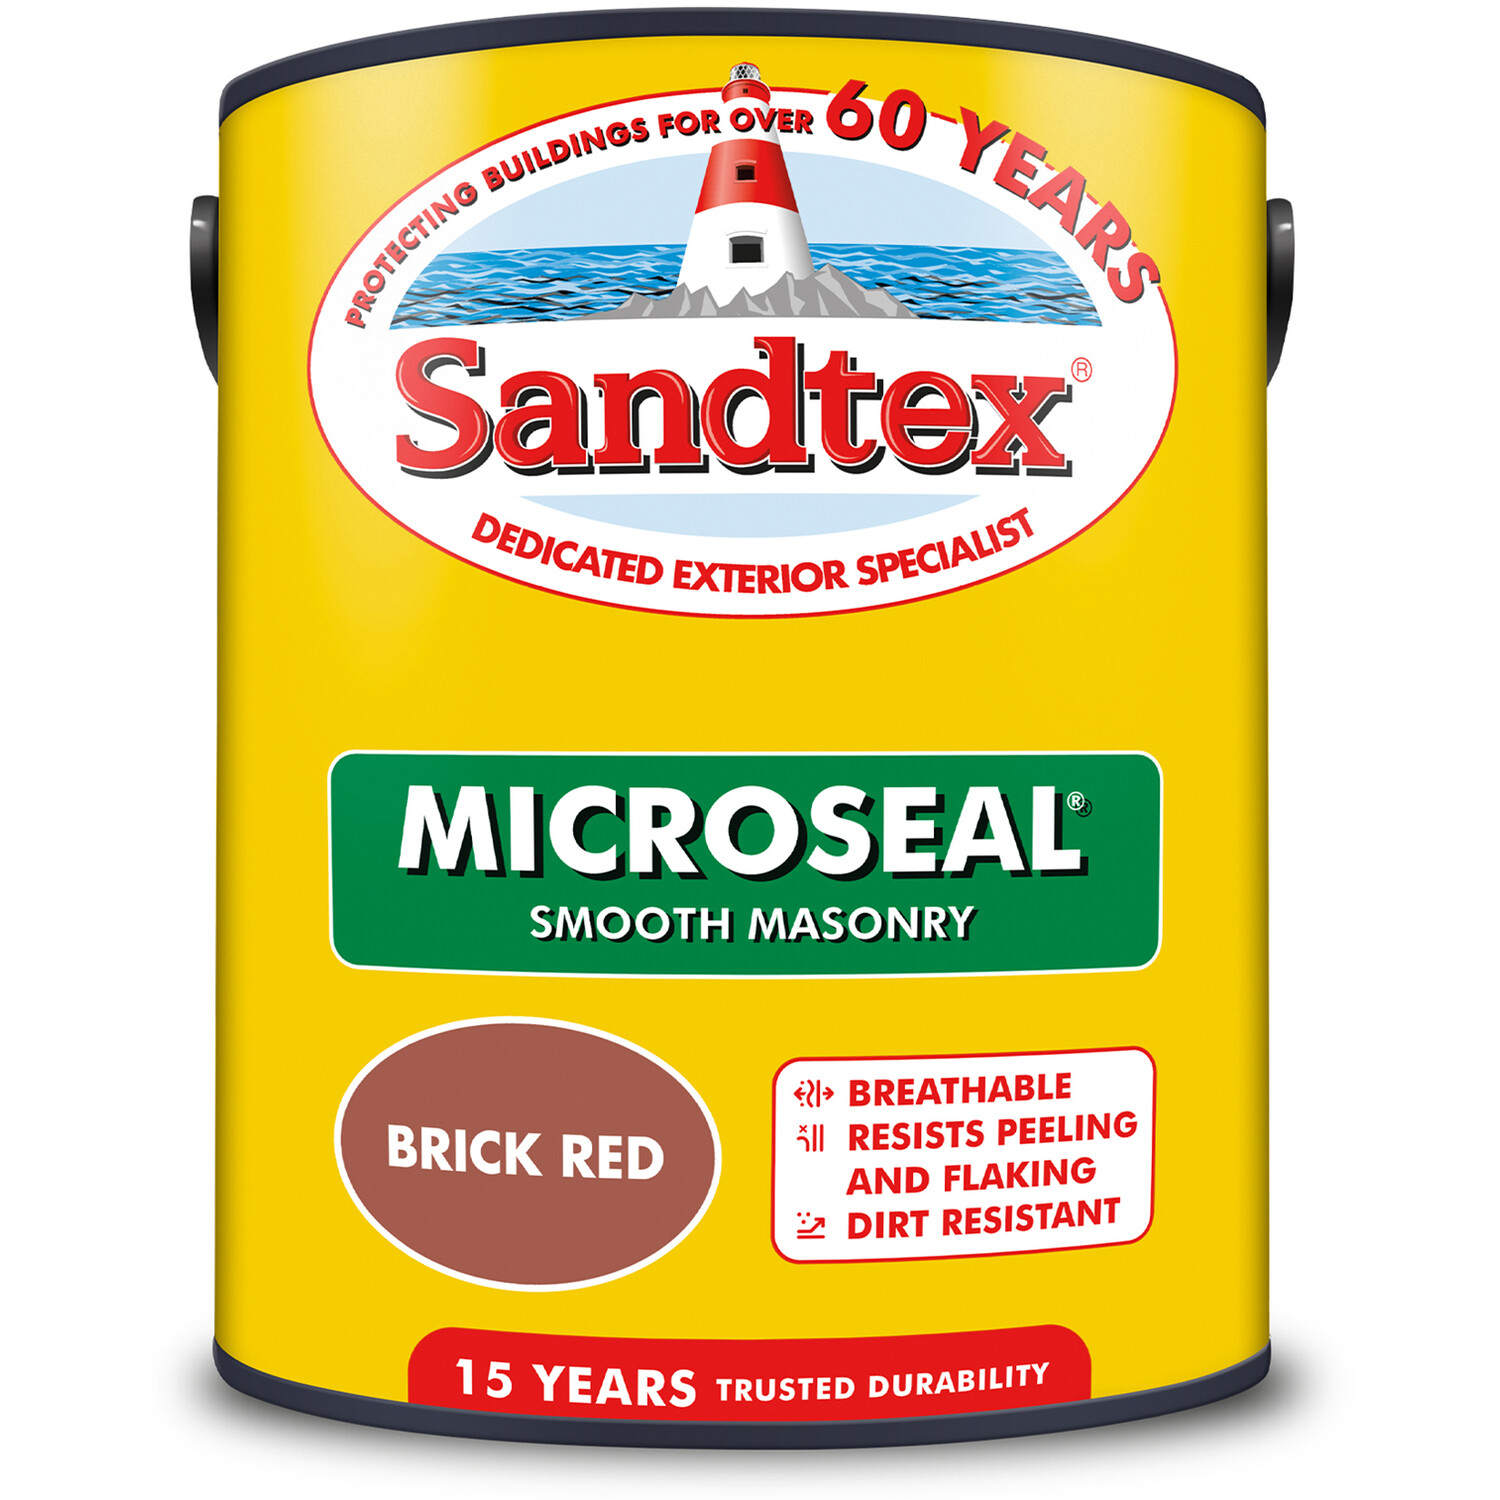 Sandtex Walls Brick Red Microseal Matt Smooth Masonry Paint 5L Image 2